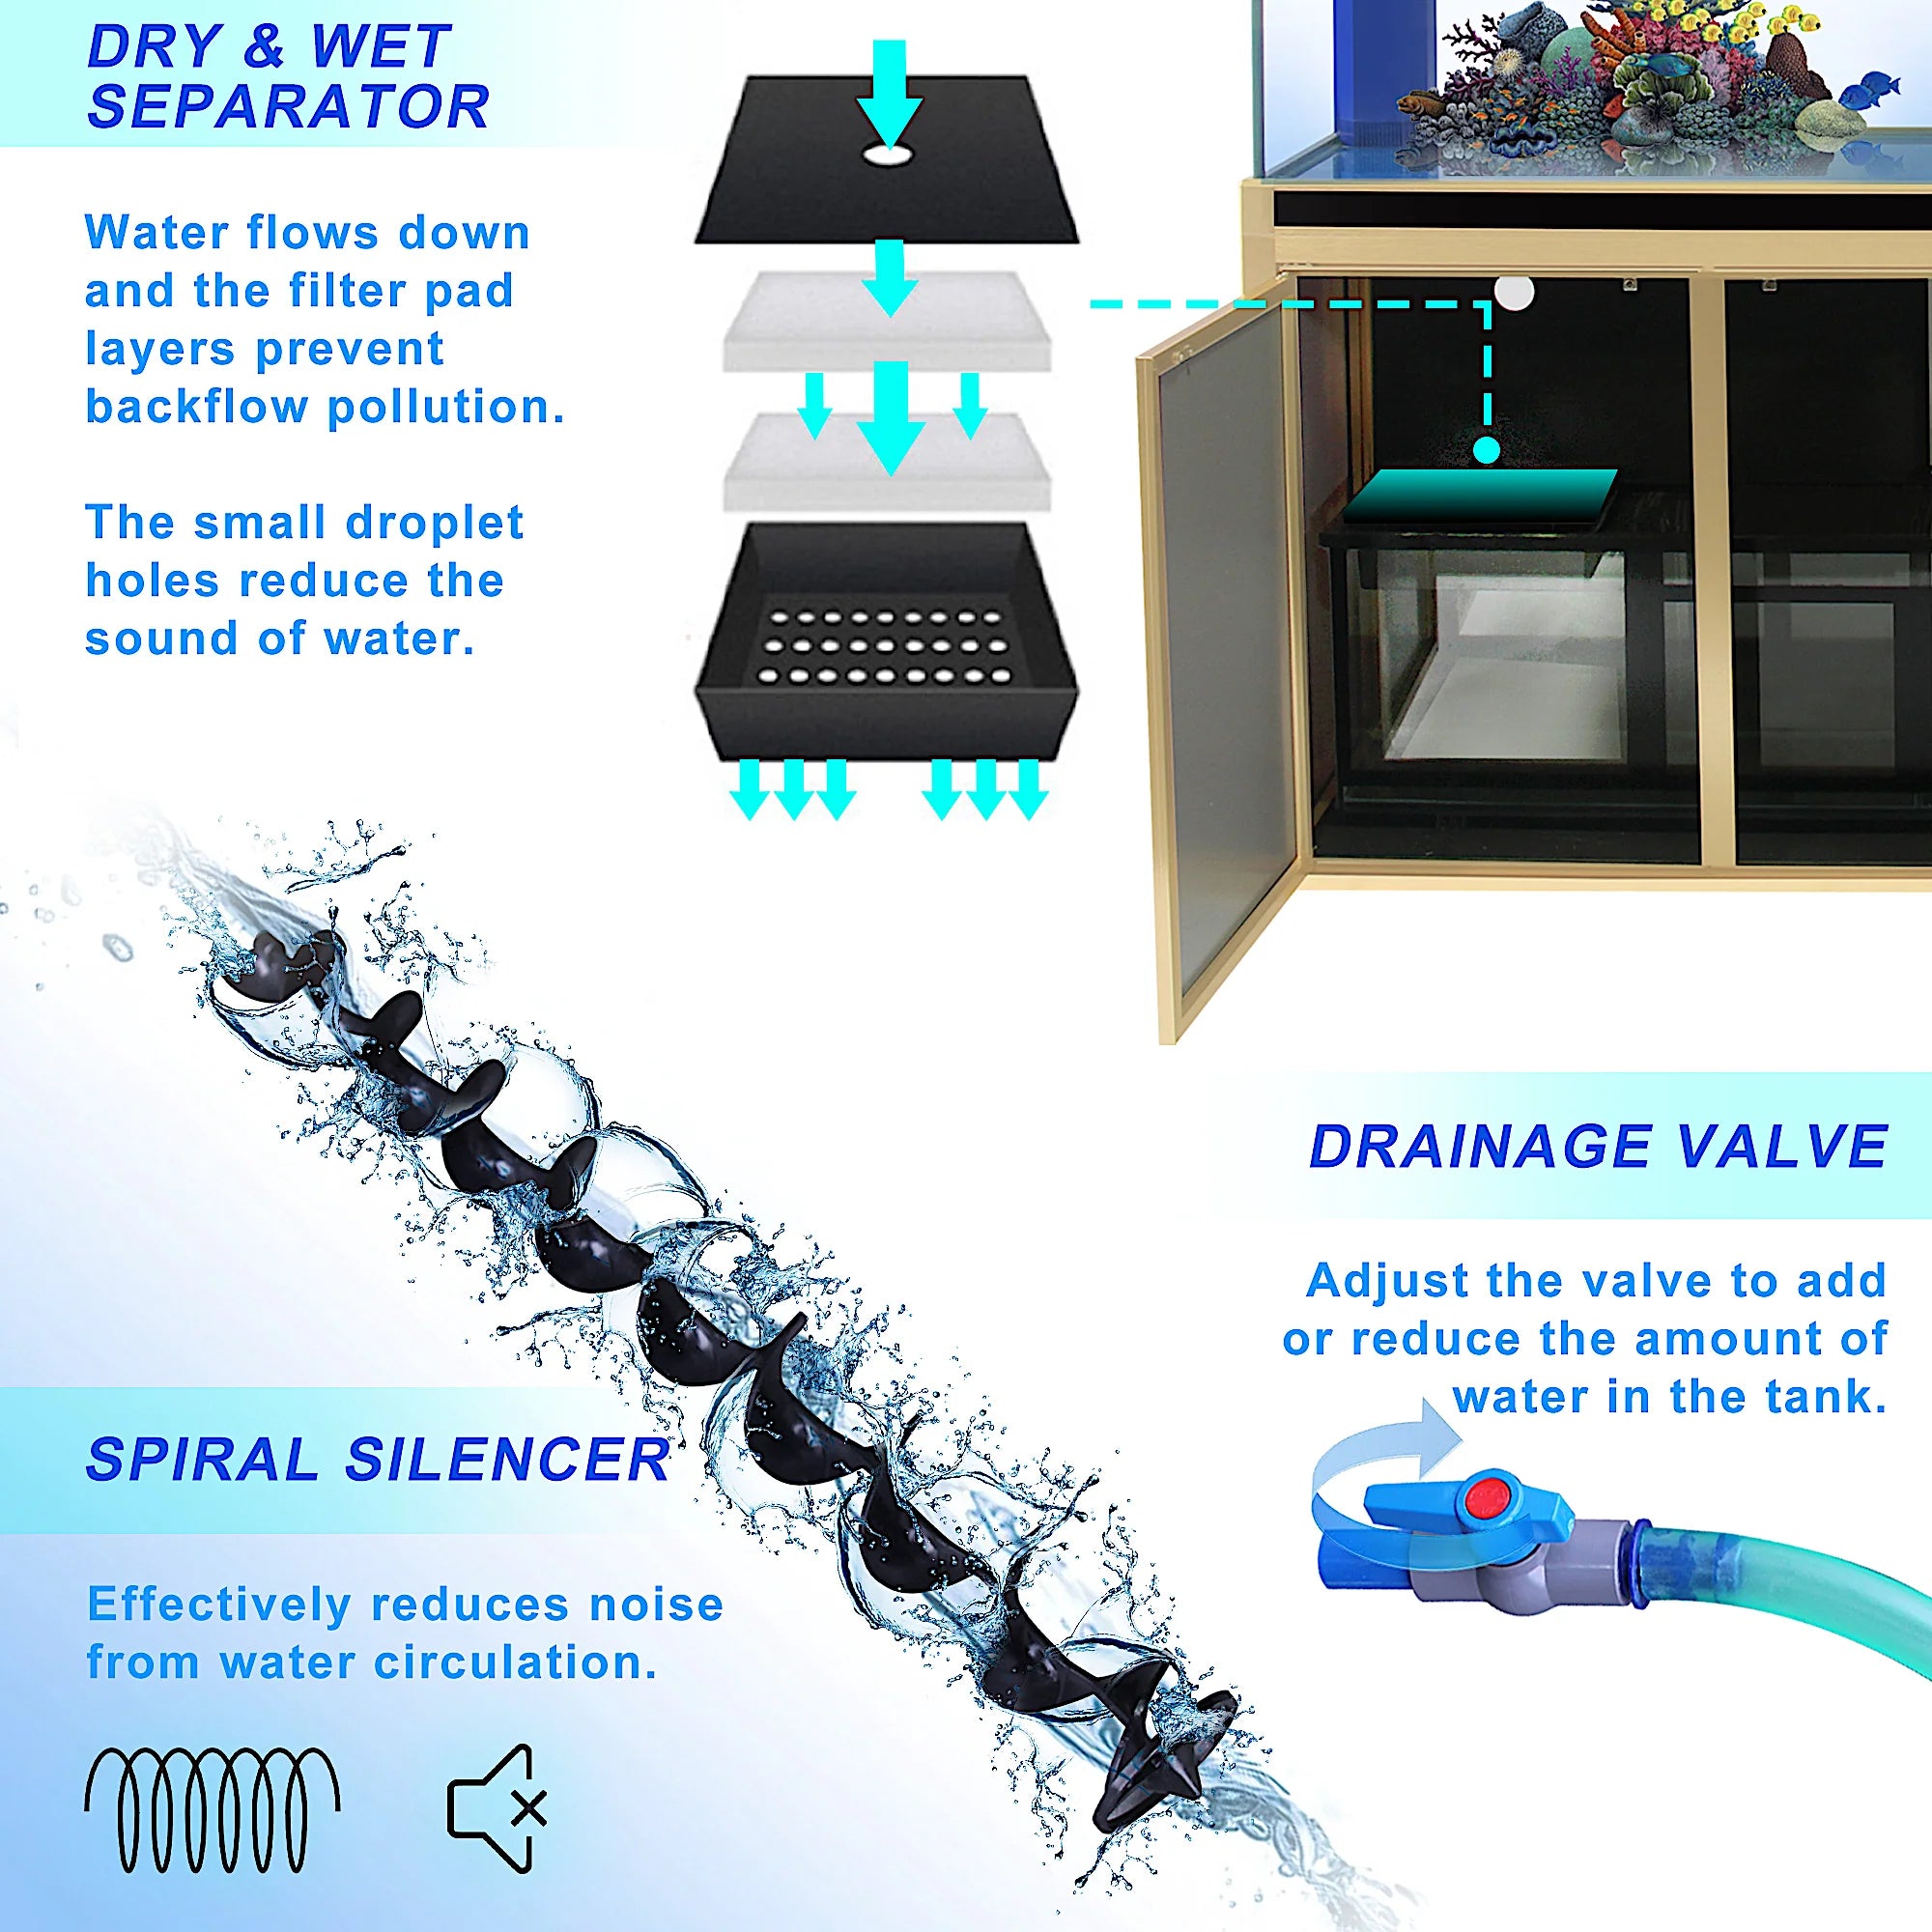 Aqua Dream 400 Gallon Tempered Glass Aquarium Black AD-2320-BP - Serenity Provision